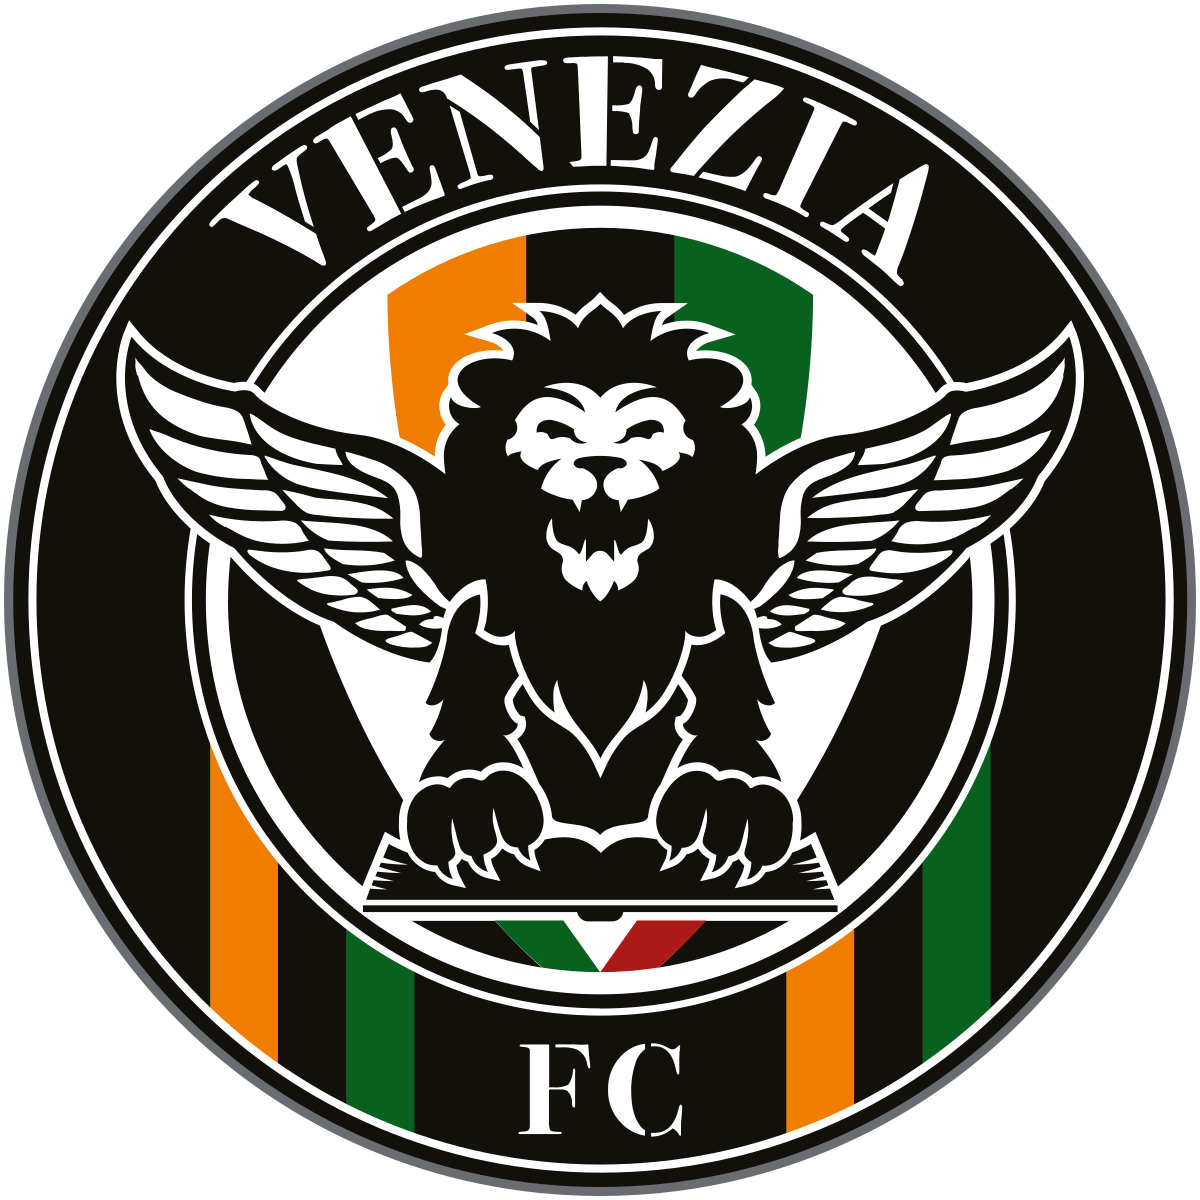 Maglia Venezia Football Club